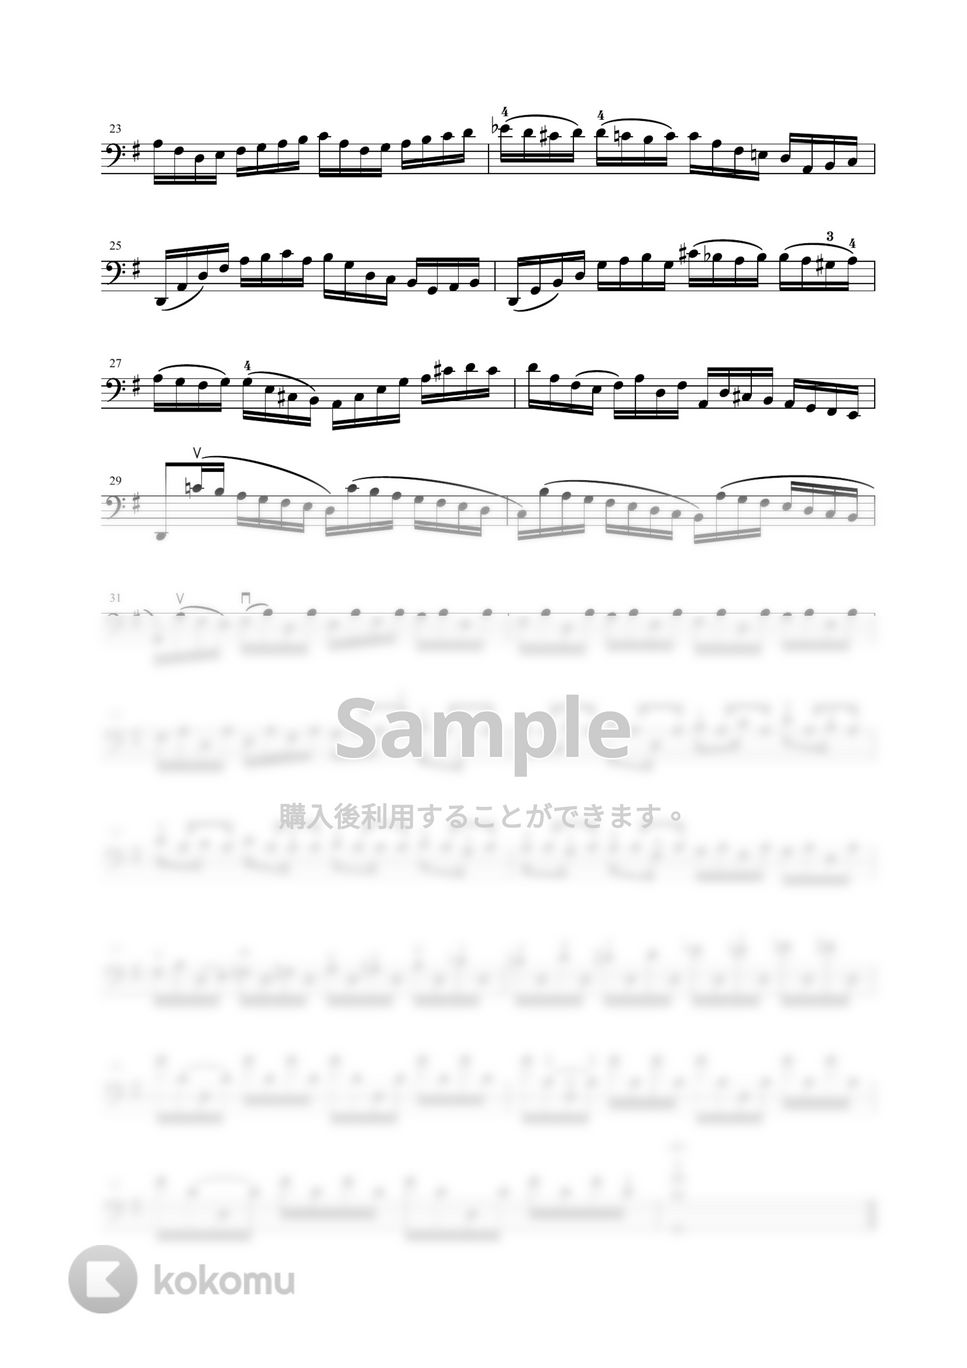 J.S.BACH - チェロ楽譜 　無伴奏チェロ組曲 より 第１番 プレリュード BWV1007 (Cello/BACH/Prelude/無伴奏チェロ) by Zoe